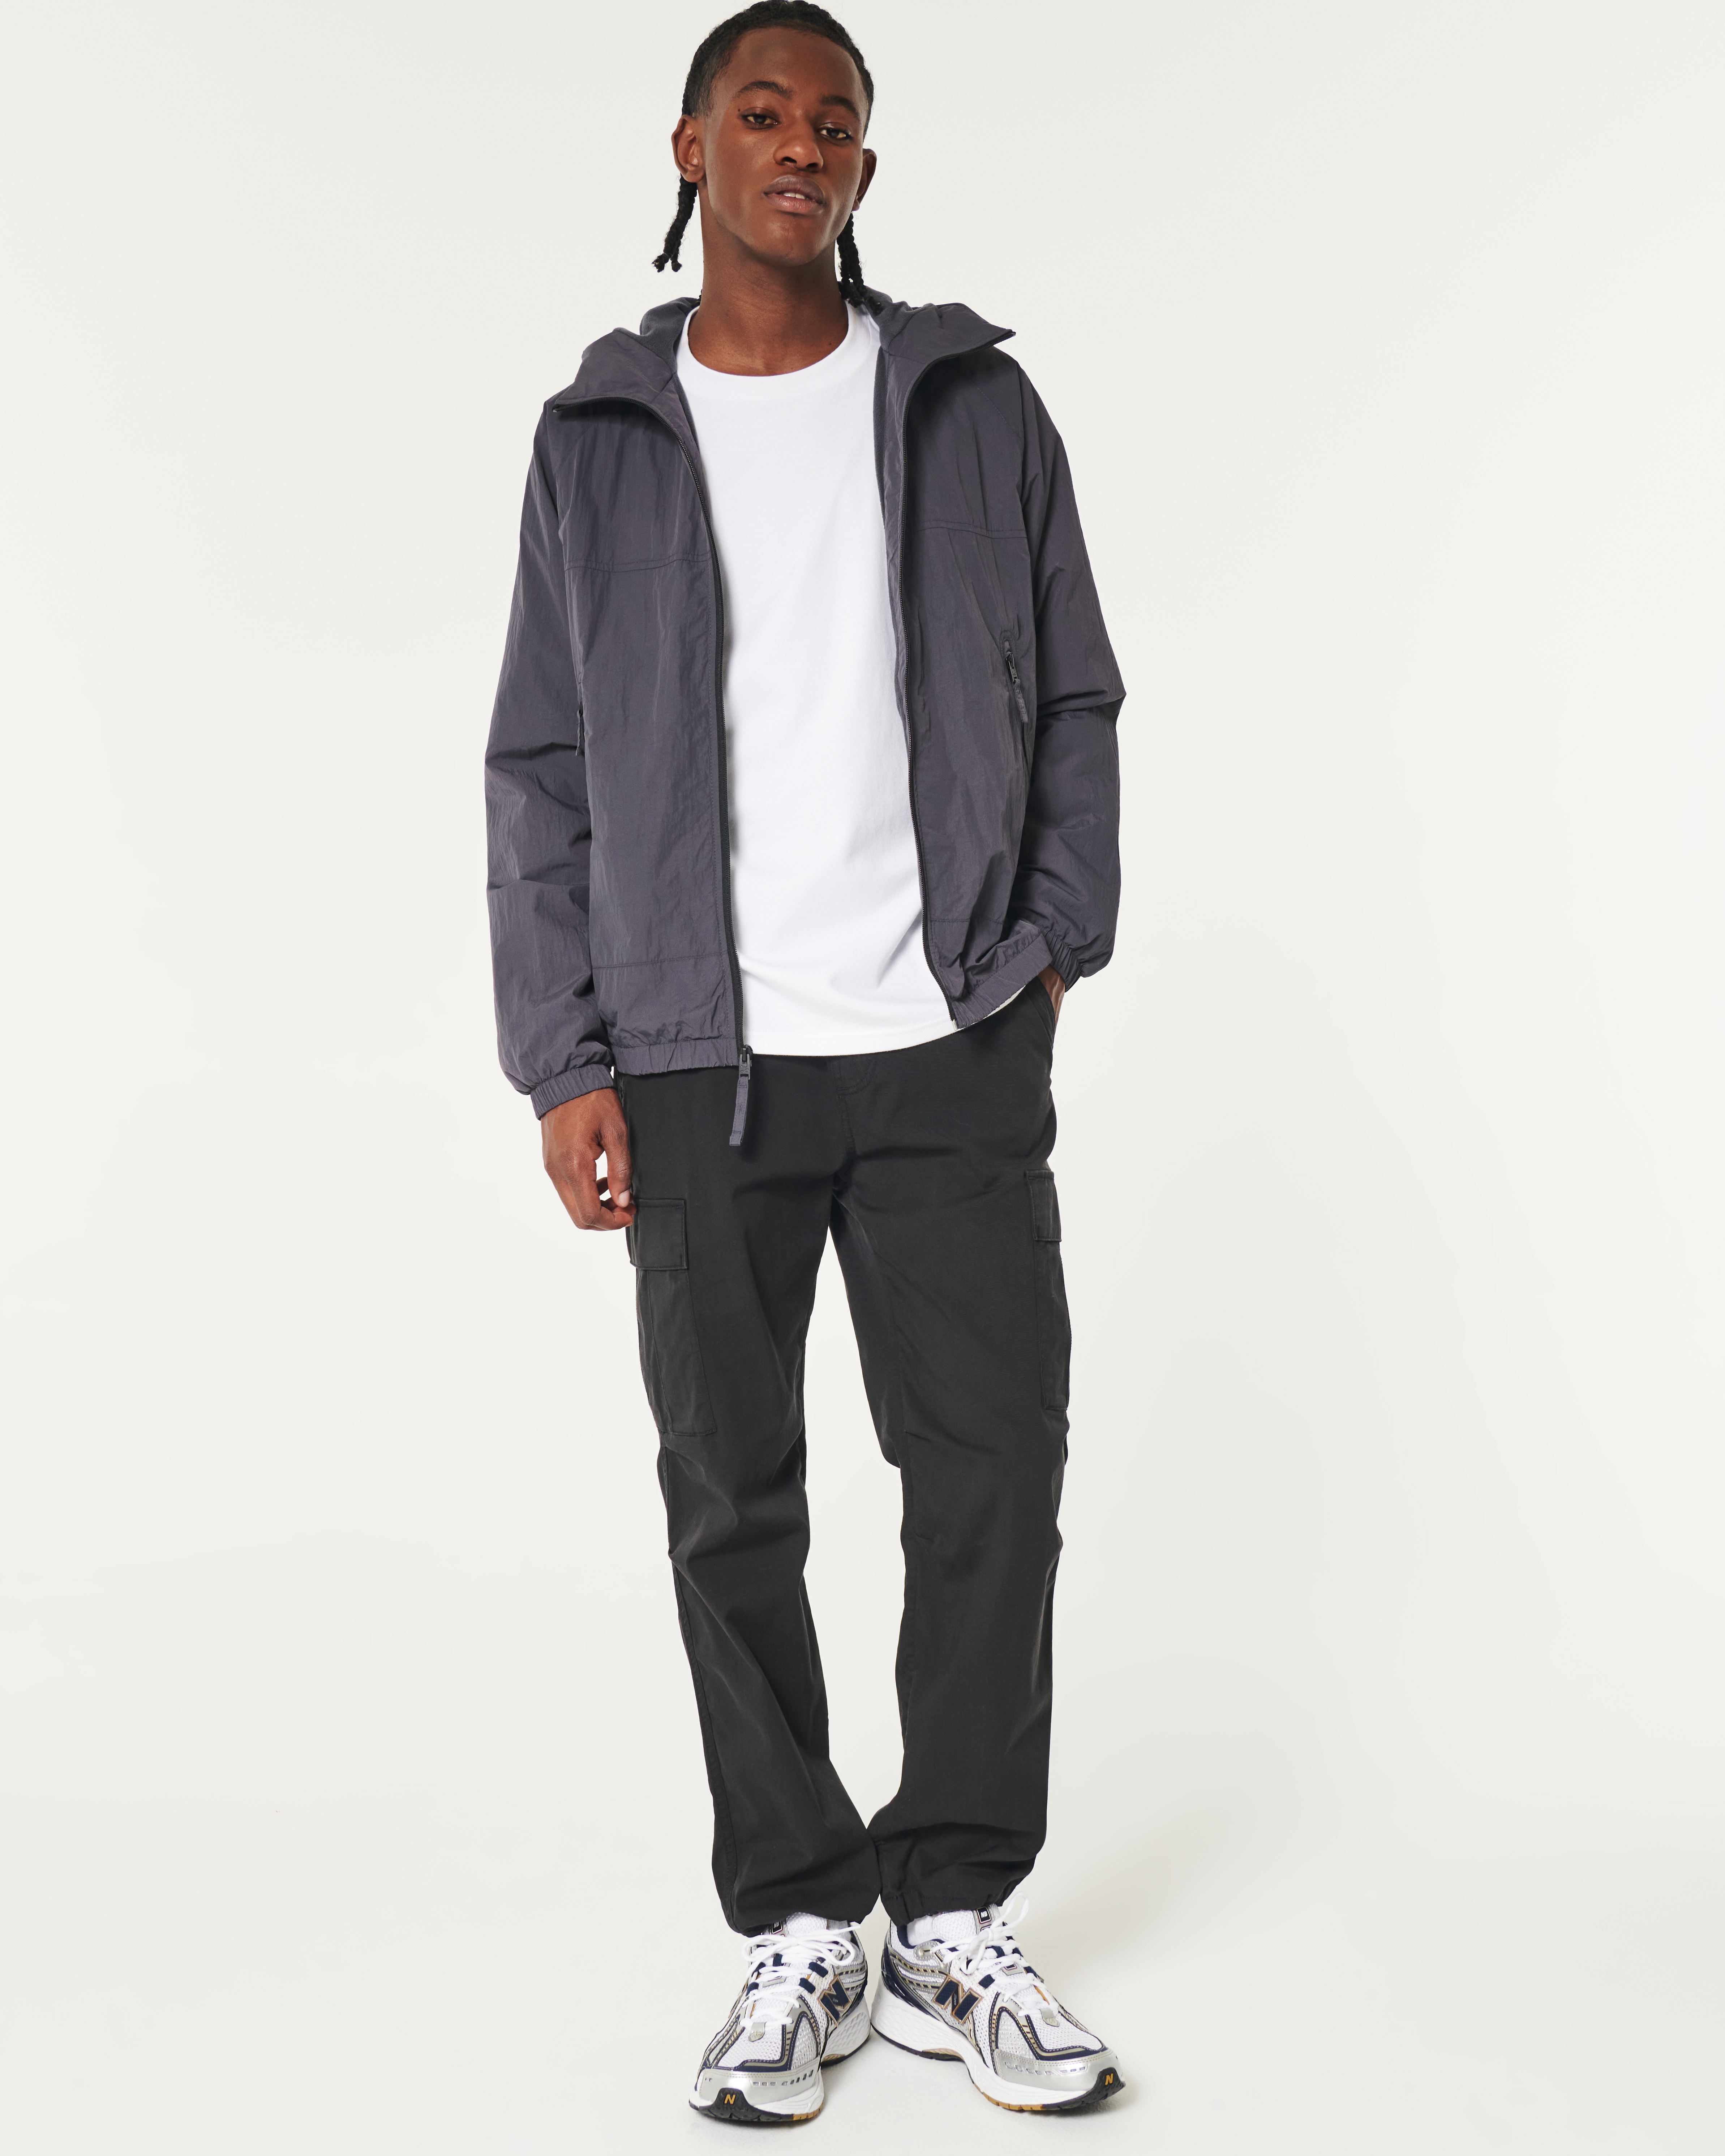 Hollister Fleece-Lined All-Weather Zip-Up Jacket